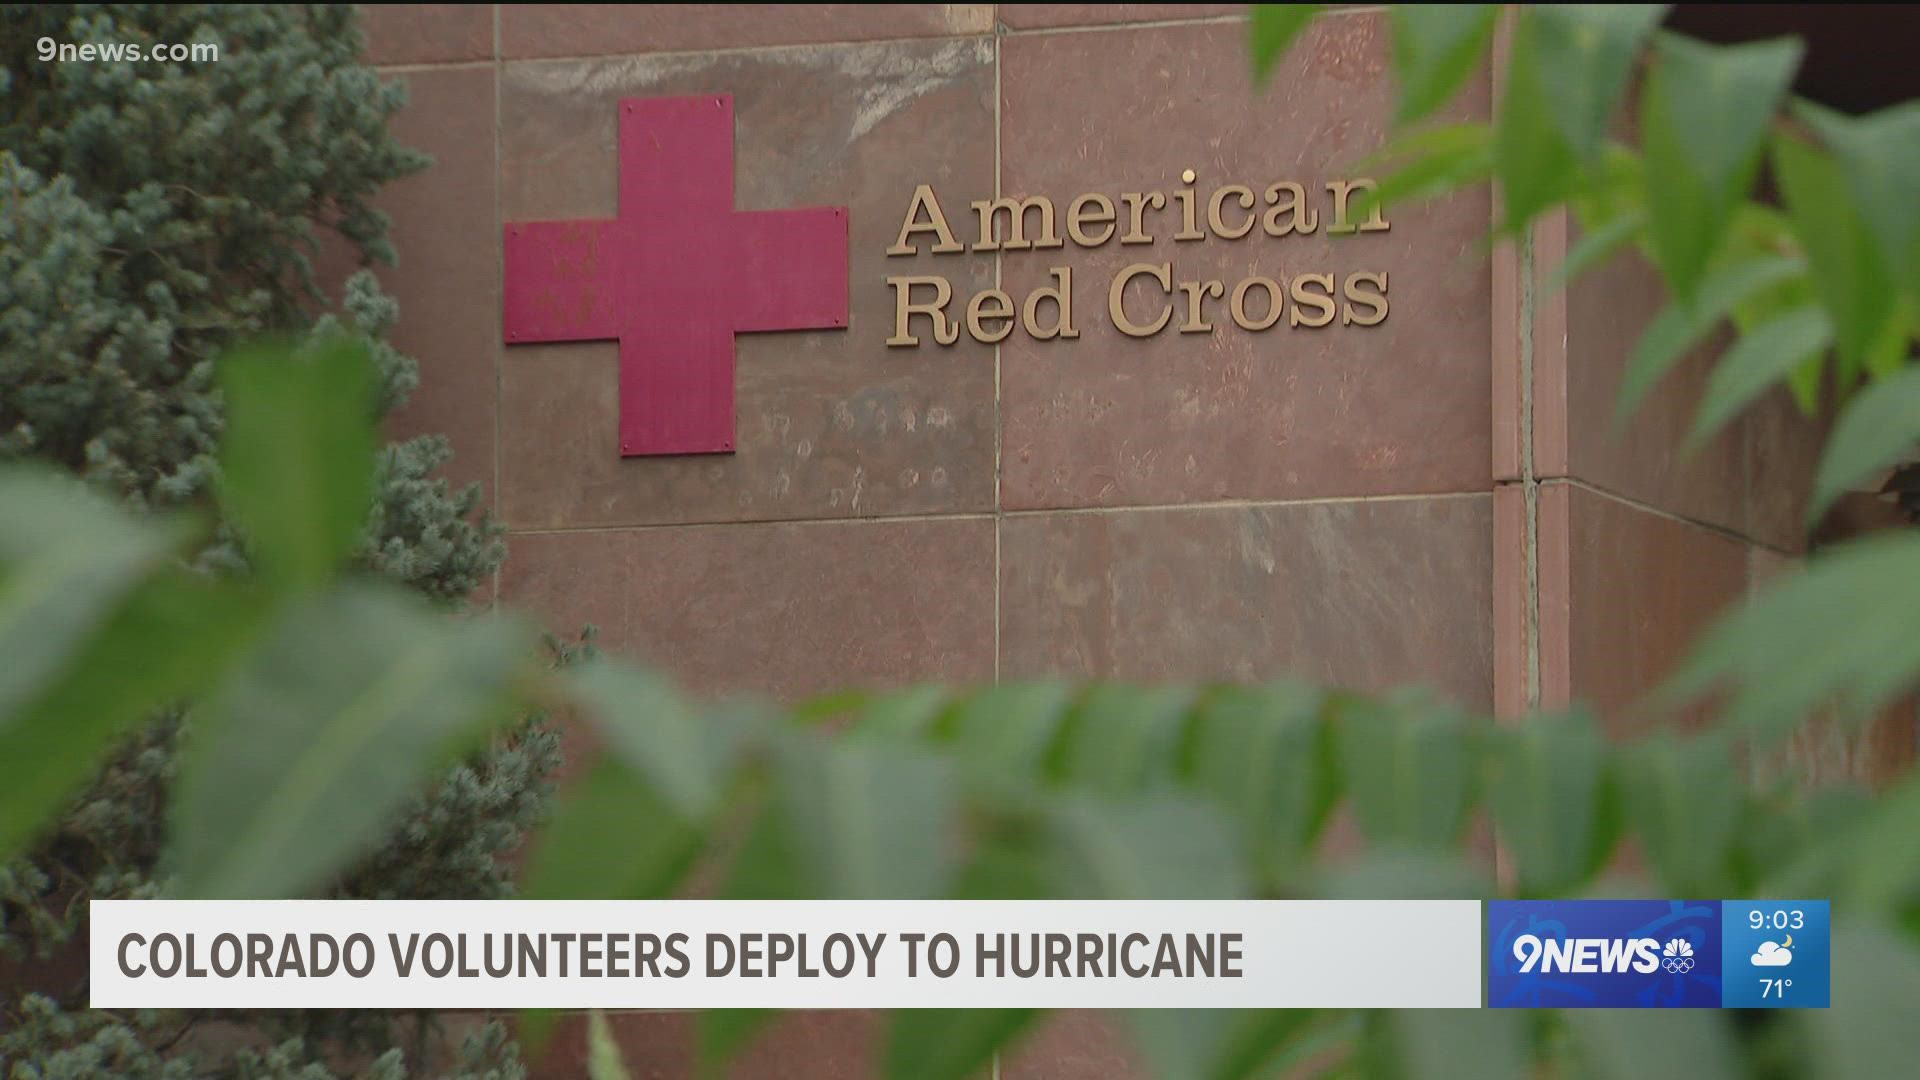 American Red Cross of Colorado